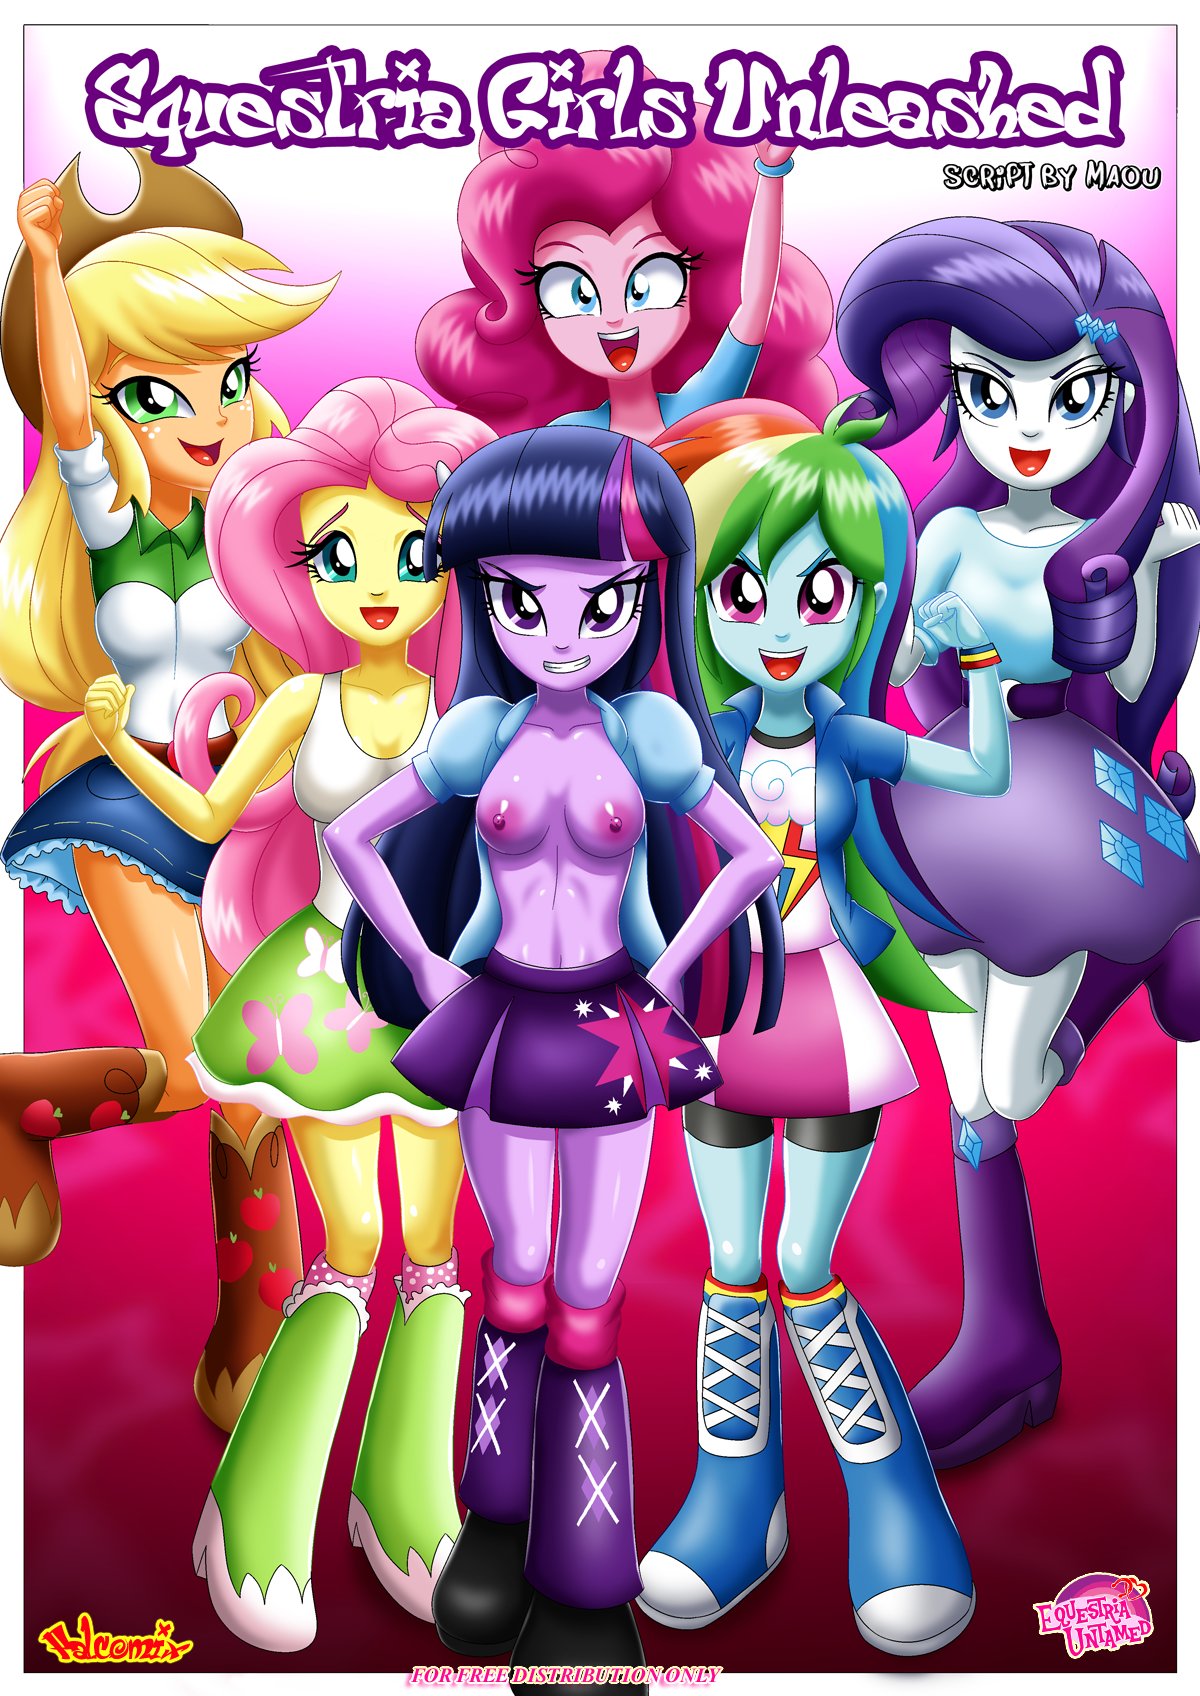 Equestria Girls Unleashed 1 (My Little Pony Friendship is Magic) comic porn HD Porn Comics image